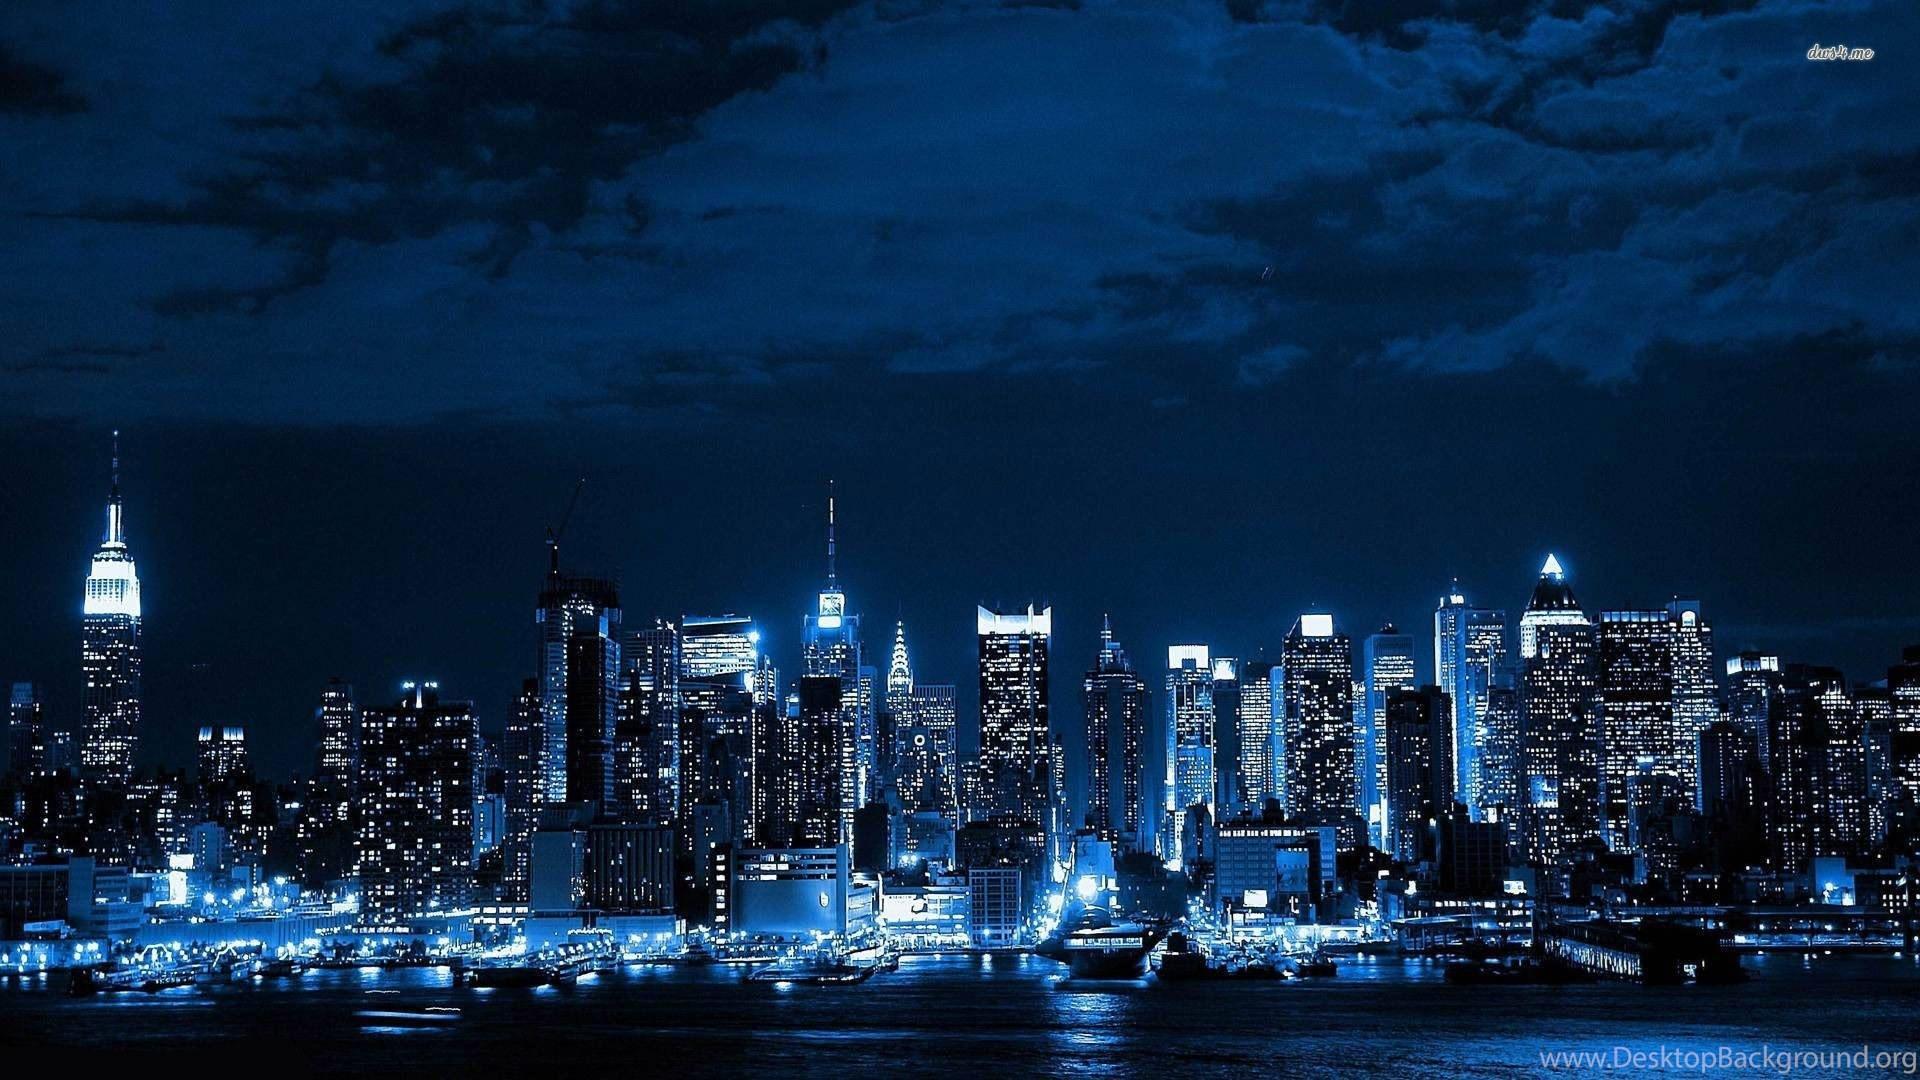 City Skyline Night Wallpapers - Top Free City Skyline Night Backgrounds ...